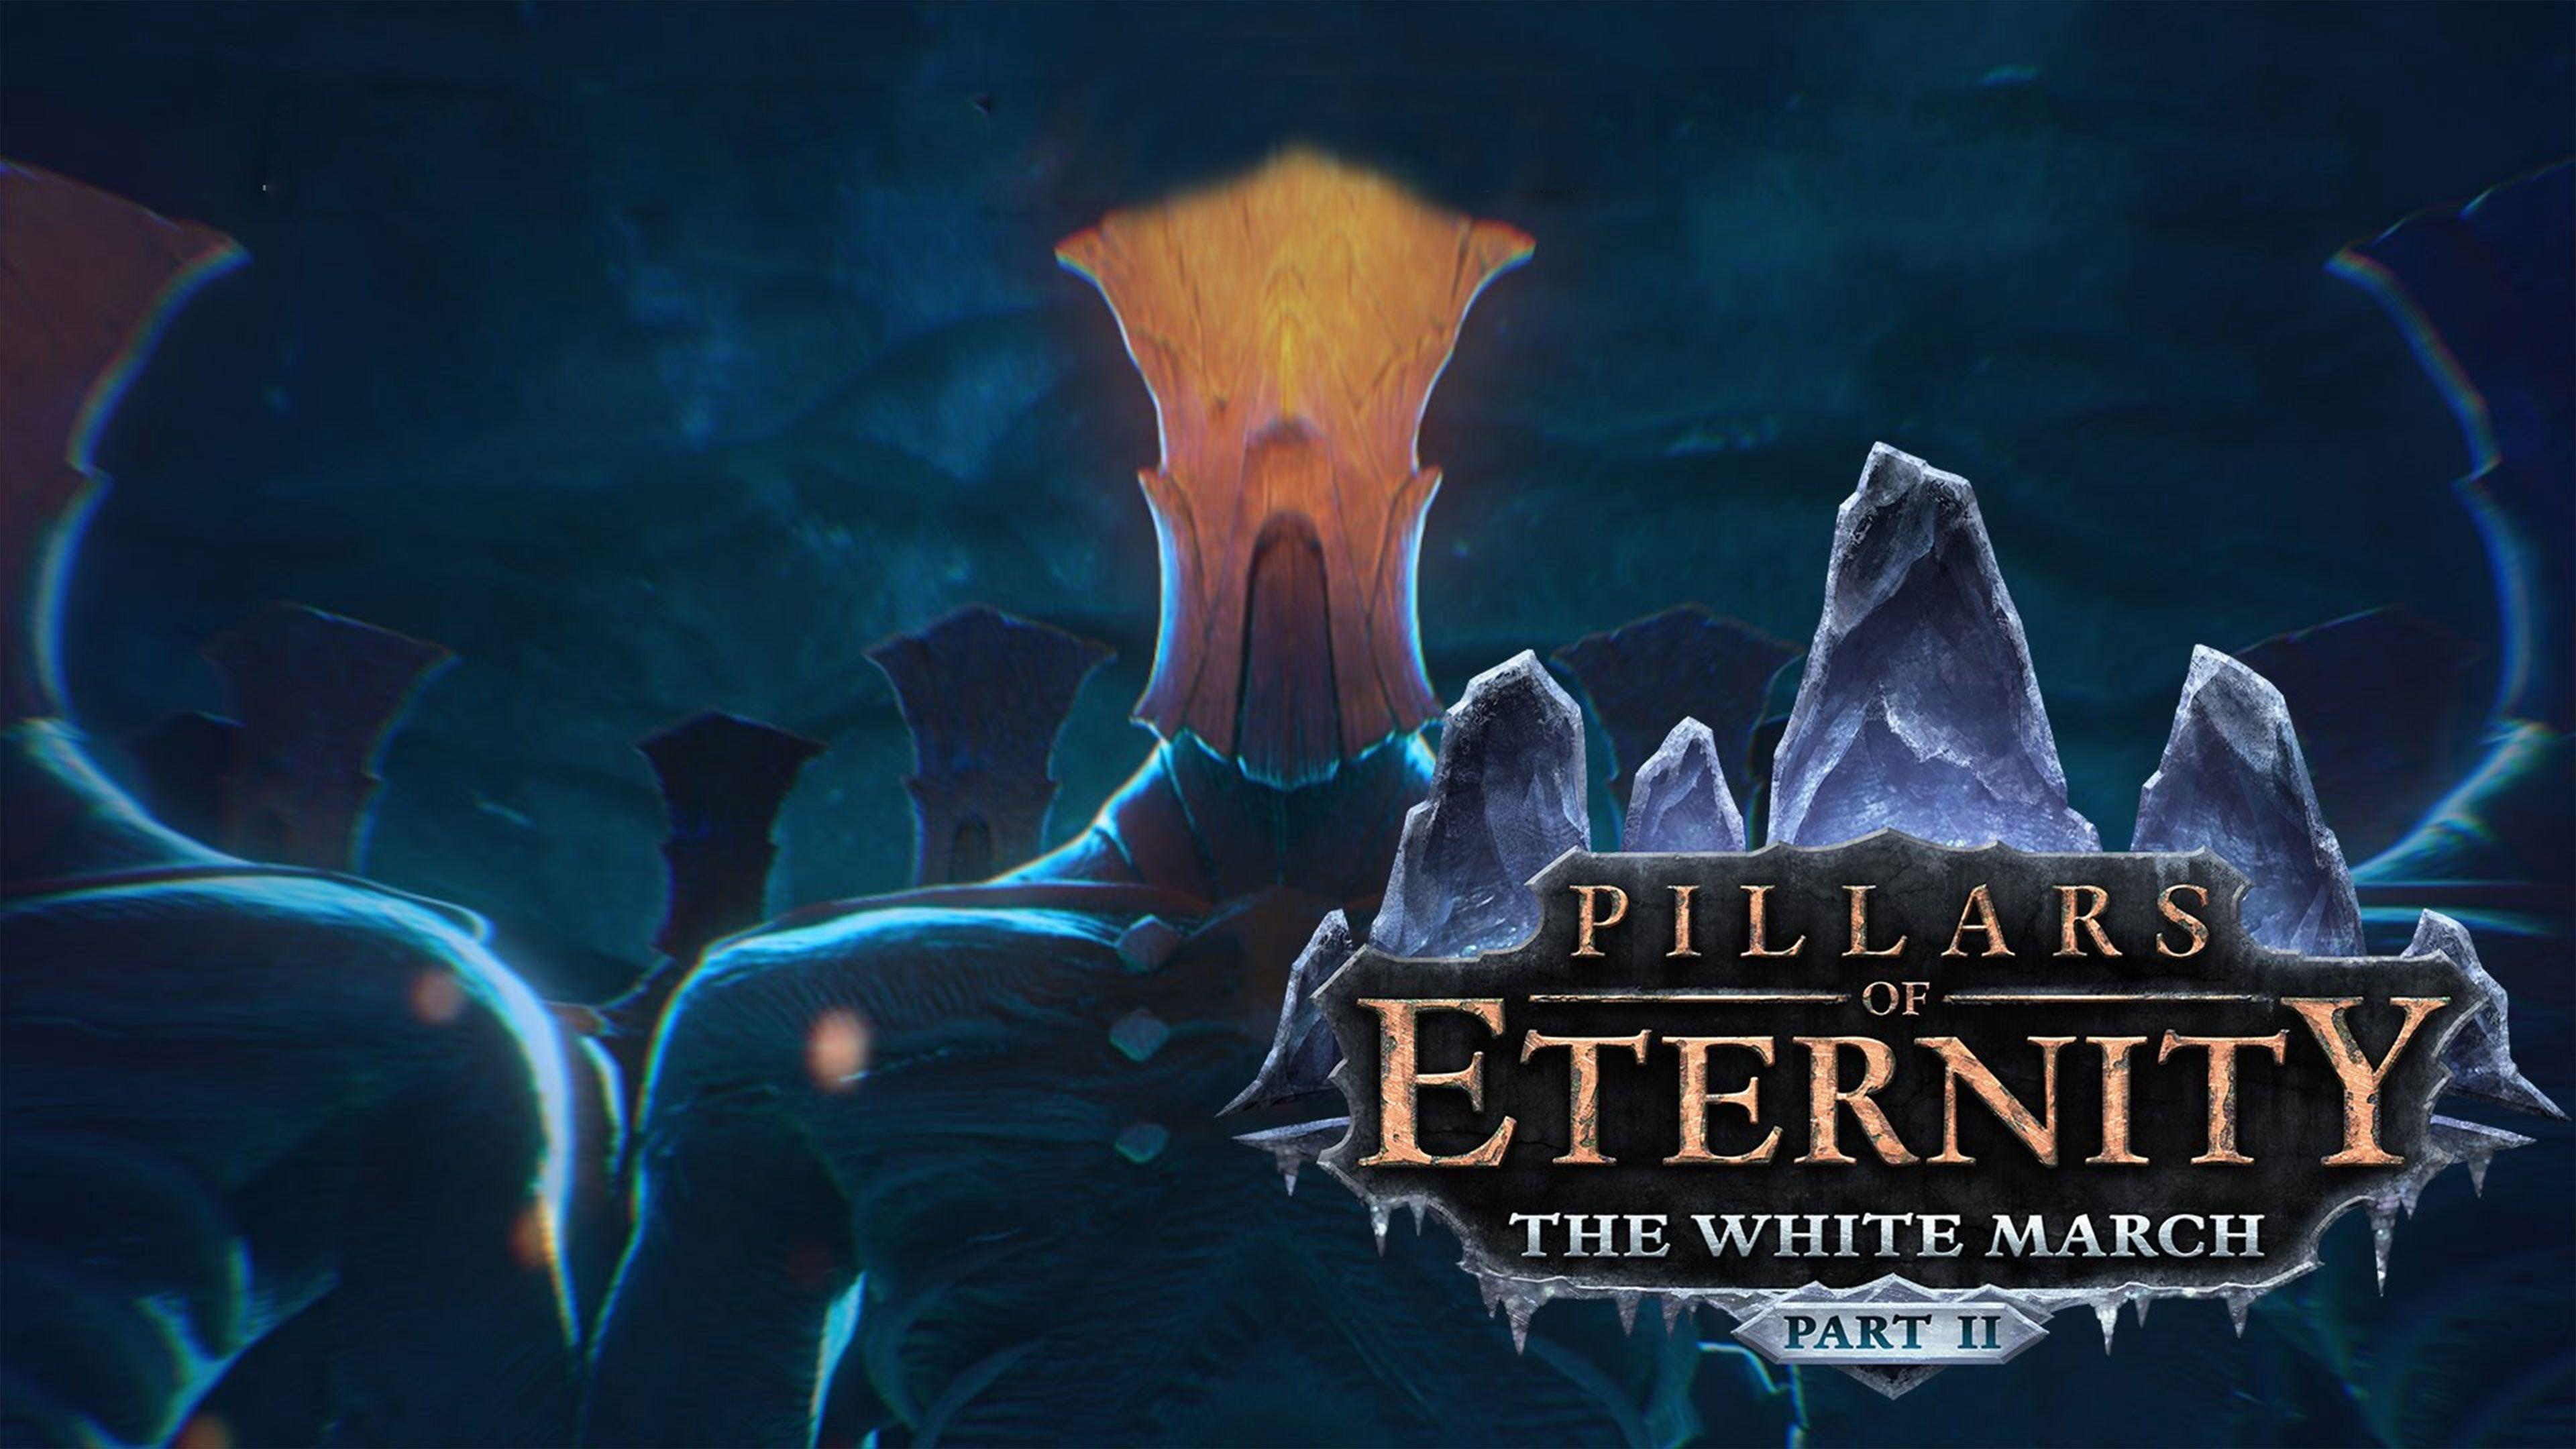 Pillars of Eternity The White March Part II Wallpaper in Ultra HD